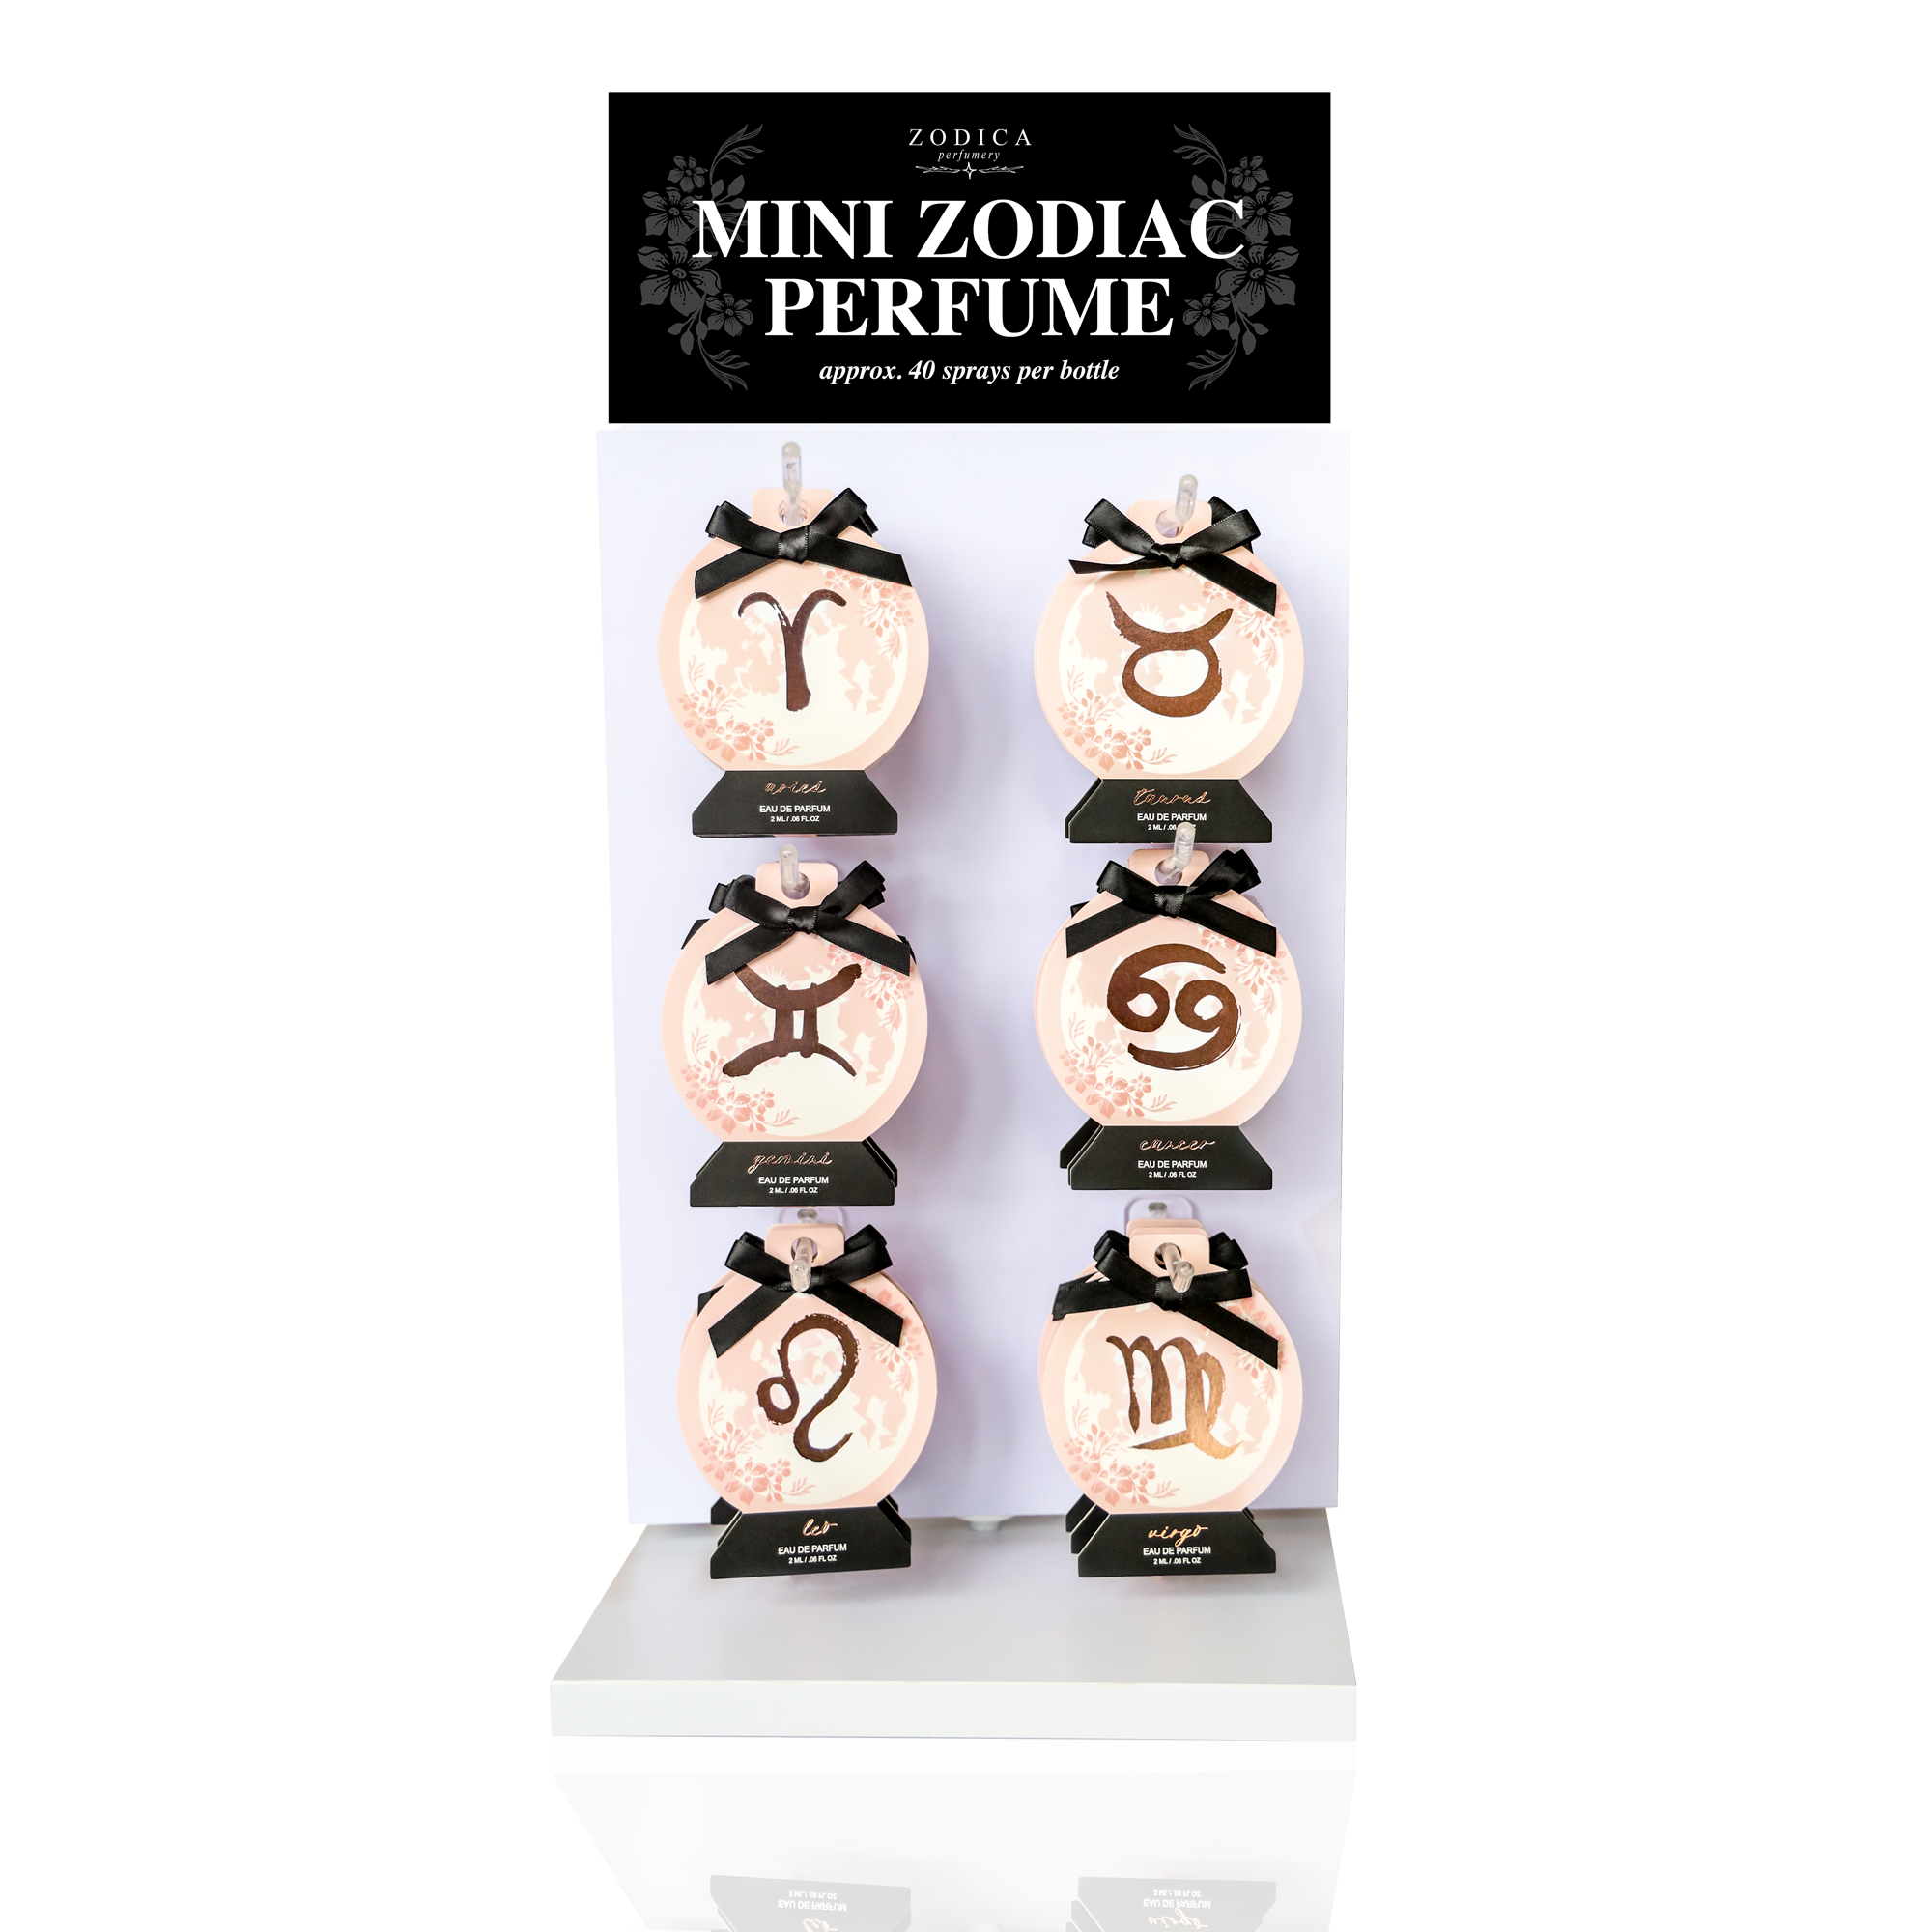 Zodiac Perfumette